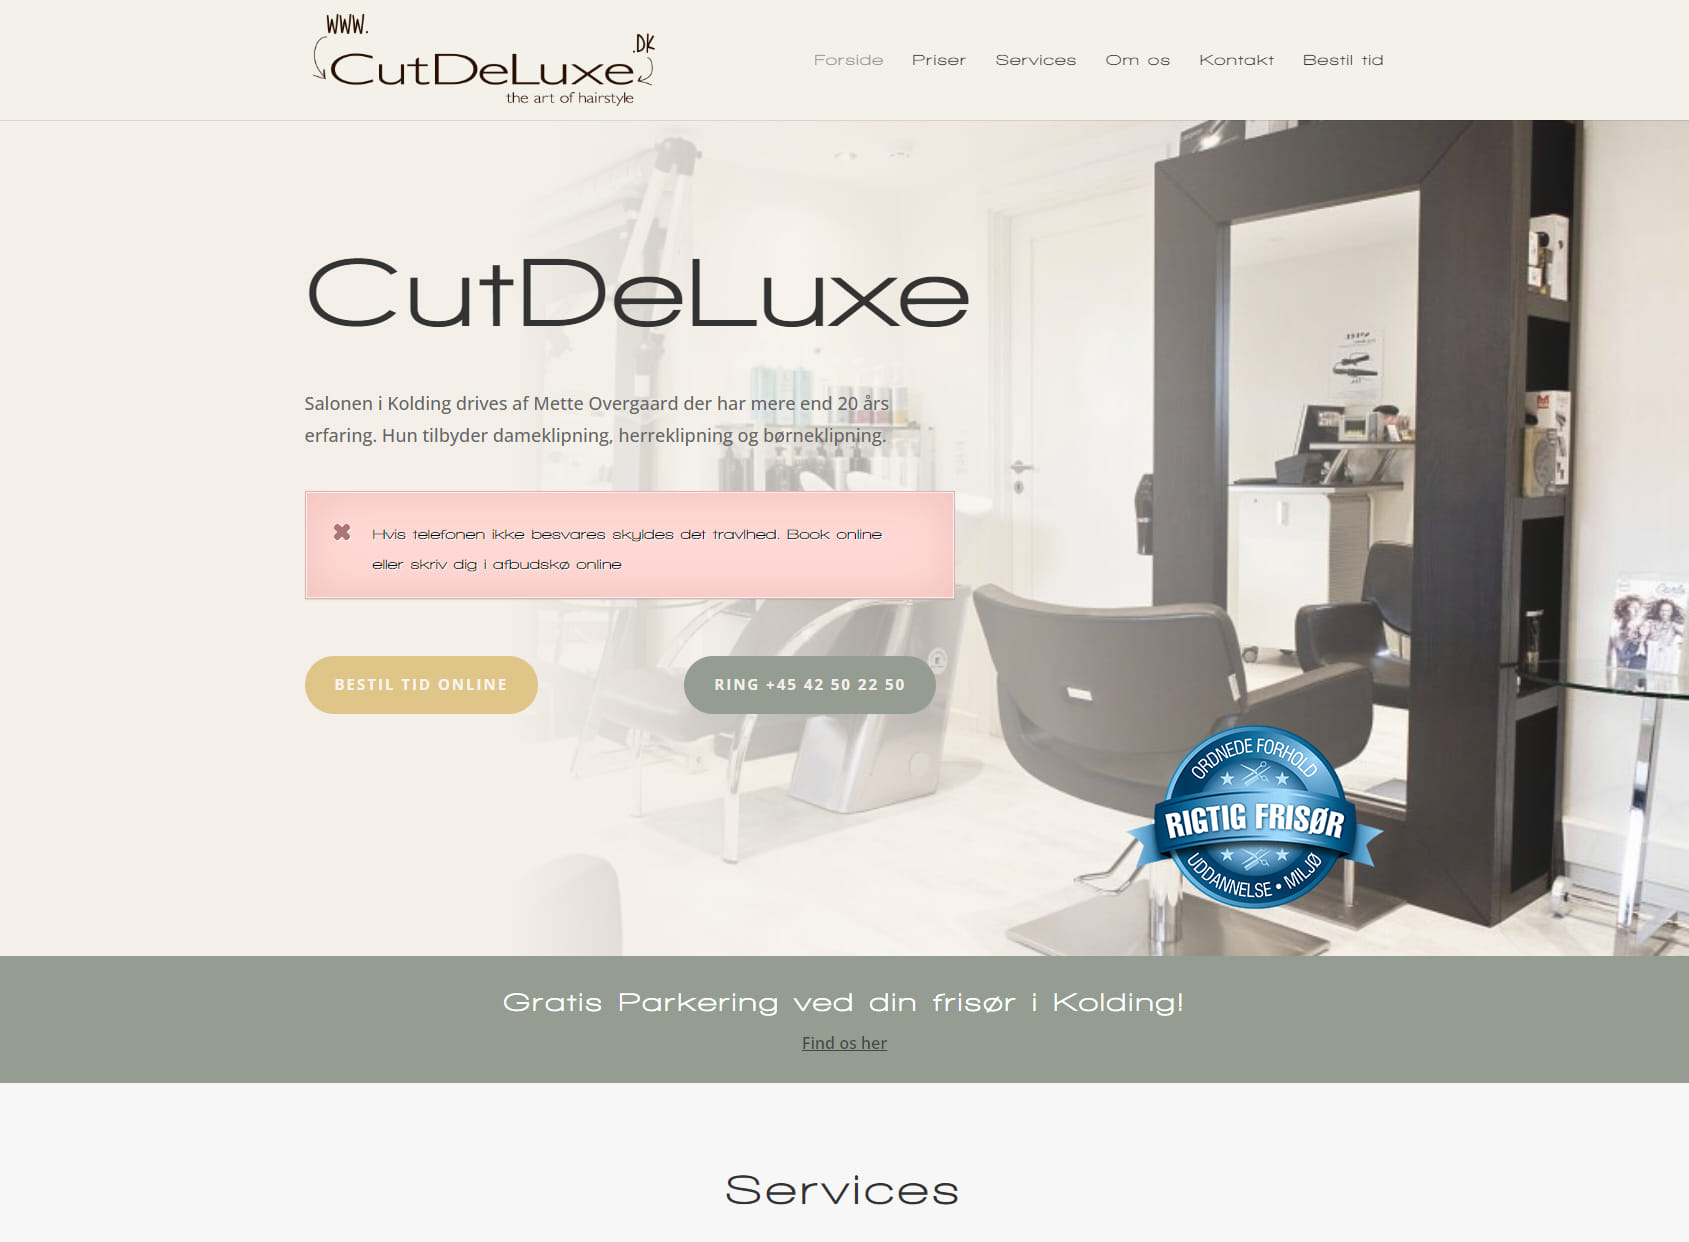 CutDeLuxe - Din frisør Kolding